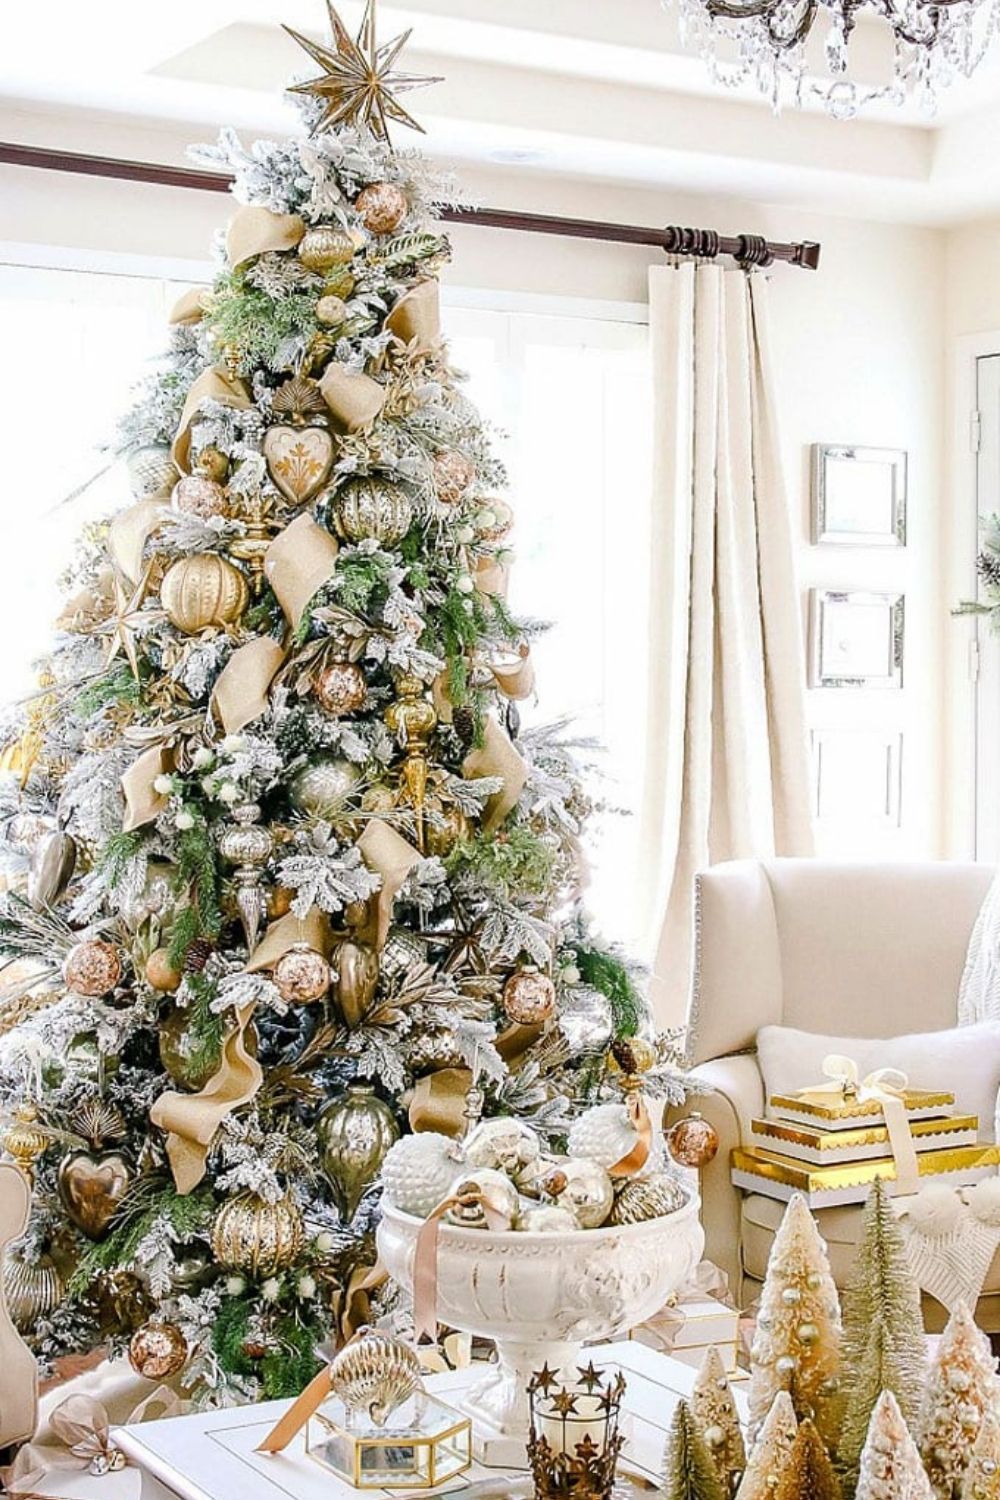 Cute Christmas tree decoration ideas 2021